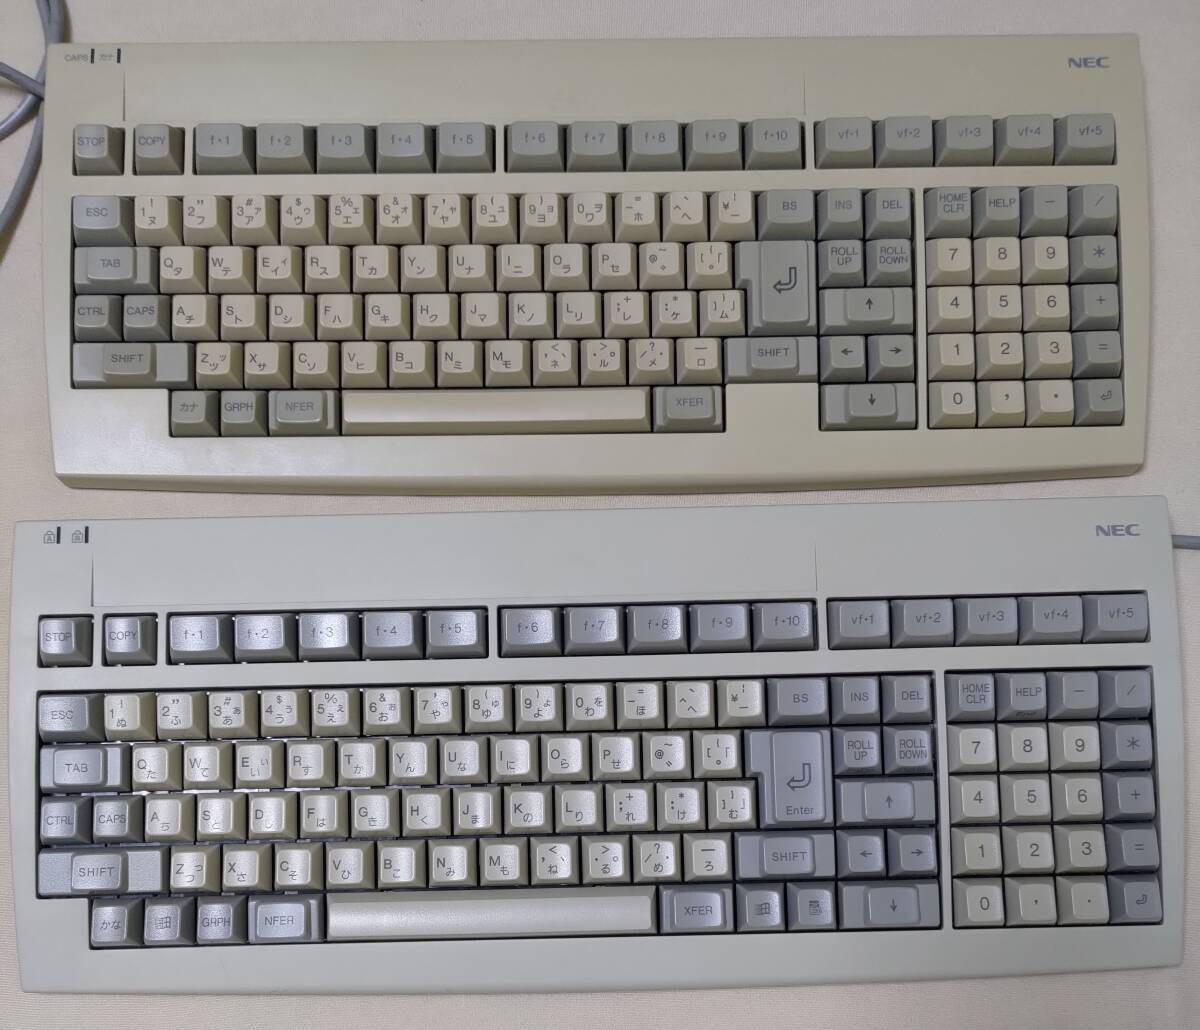 NEC PC-9801/PC-9821シリーズ用キーボード Windowsキー付 清掃済 現状品_参考比較。上キーボードは付属しません